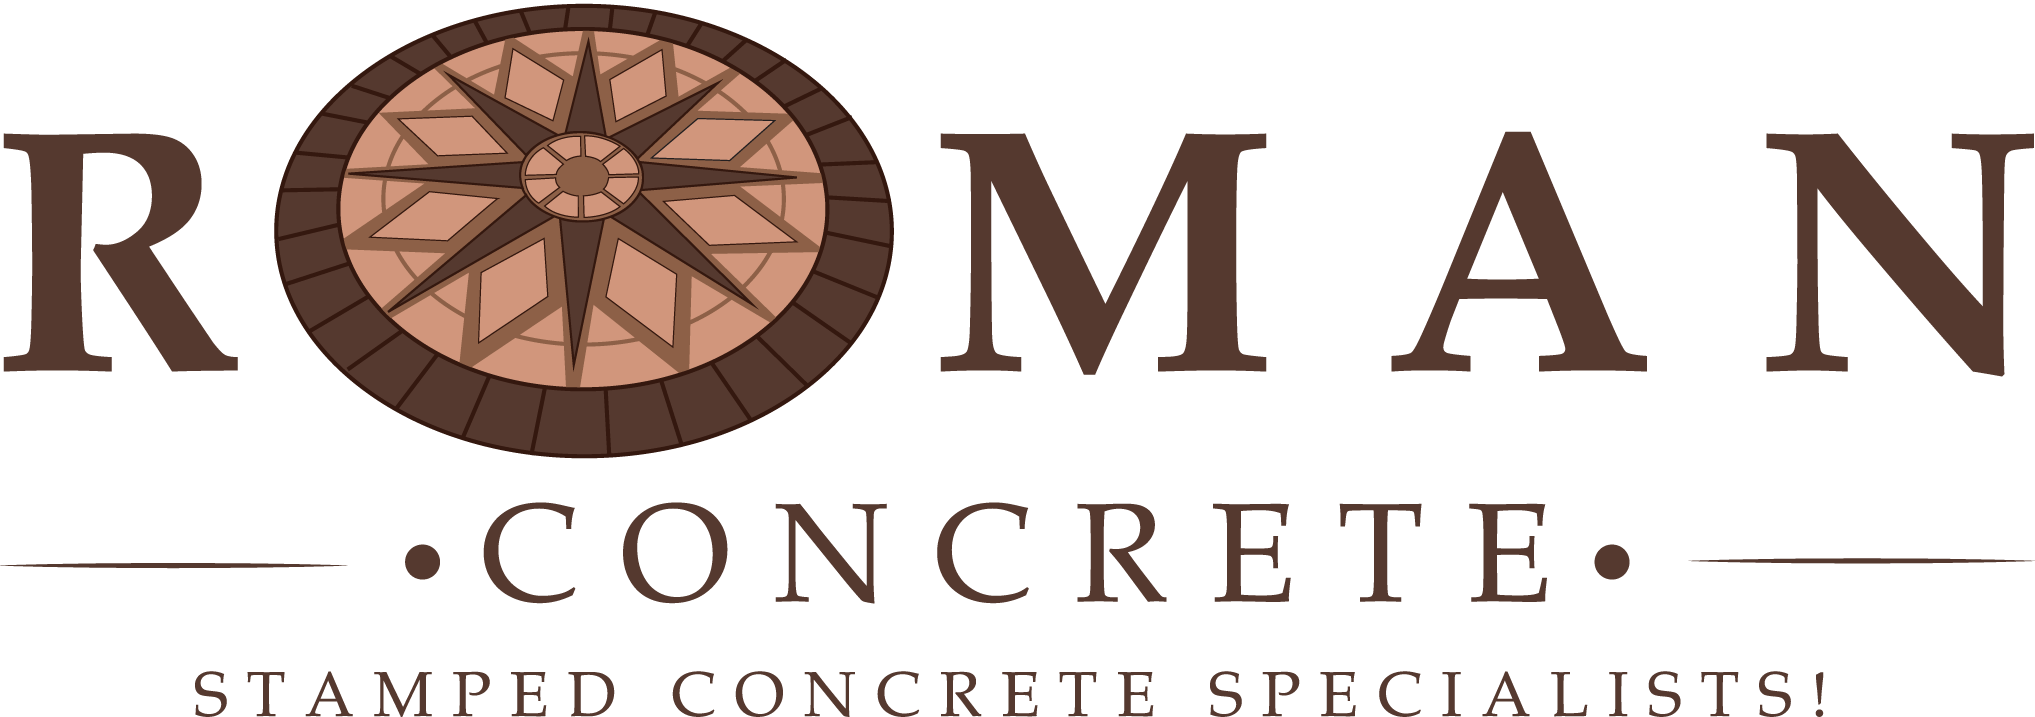 Roman Concrete logo. Text underneath reads: Stamped concrete specialists!